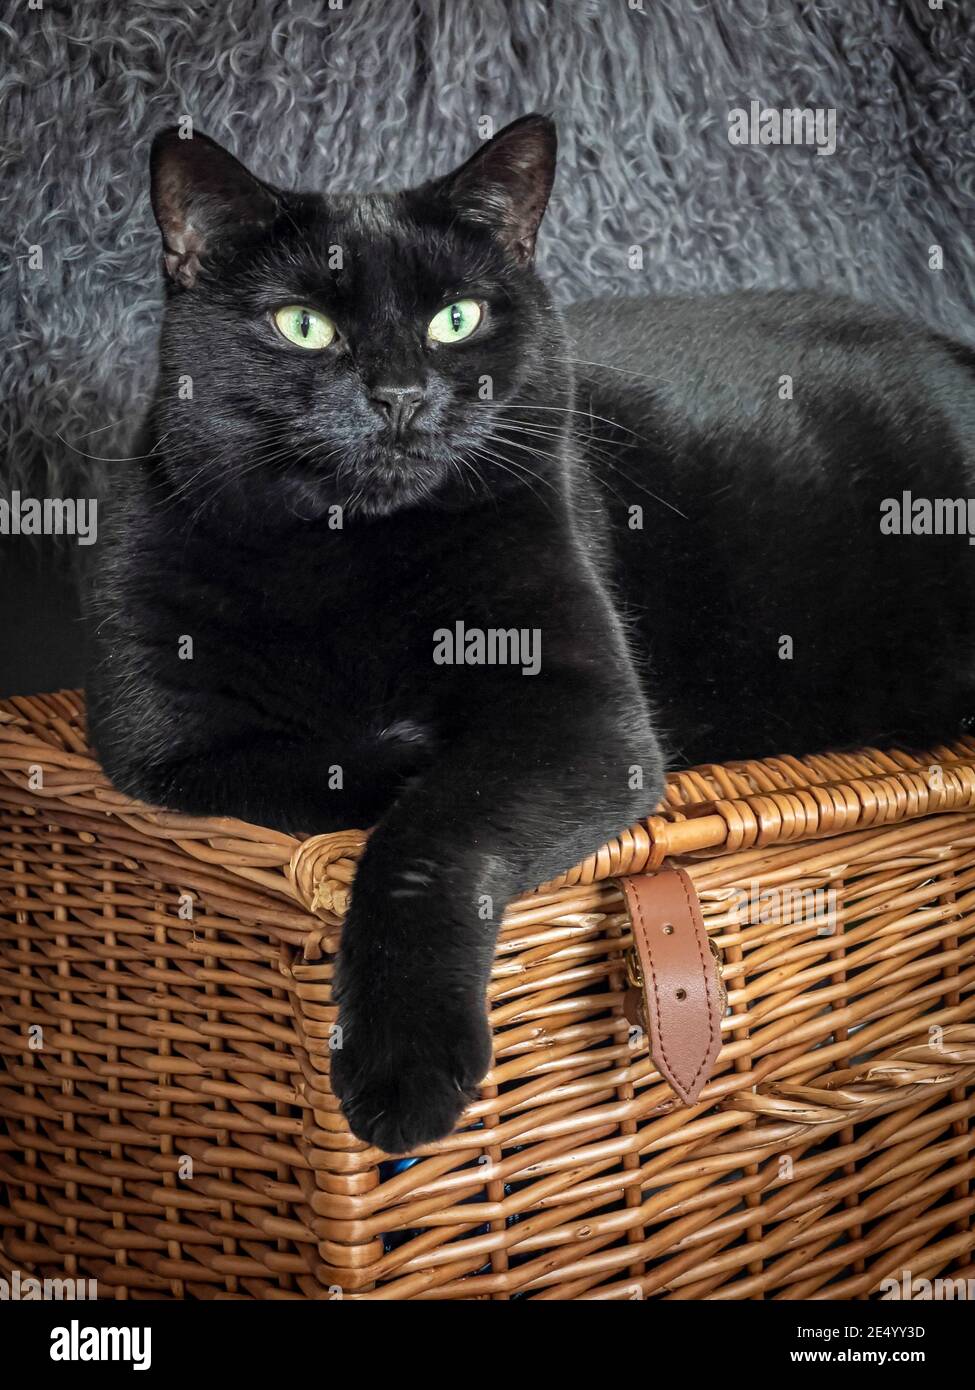 Black cat sat on top of wicker hamper Stock Photo